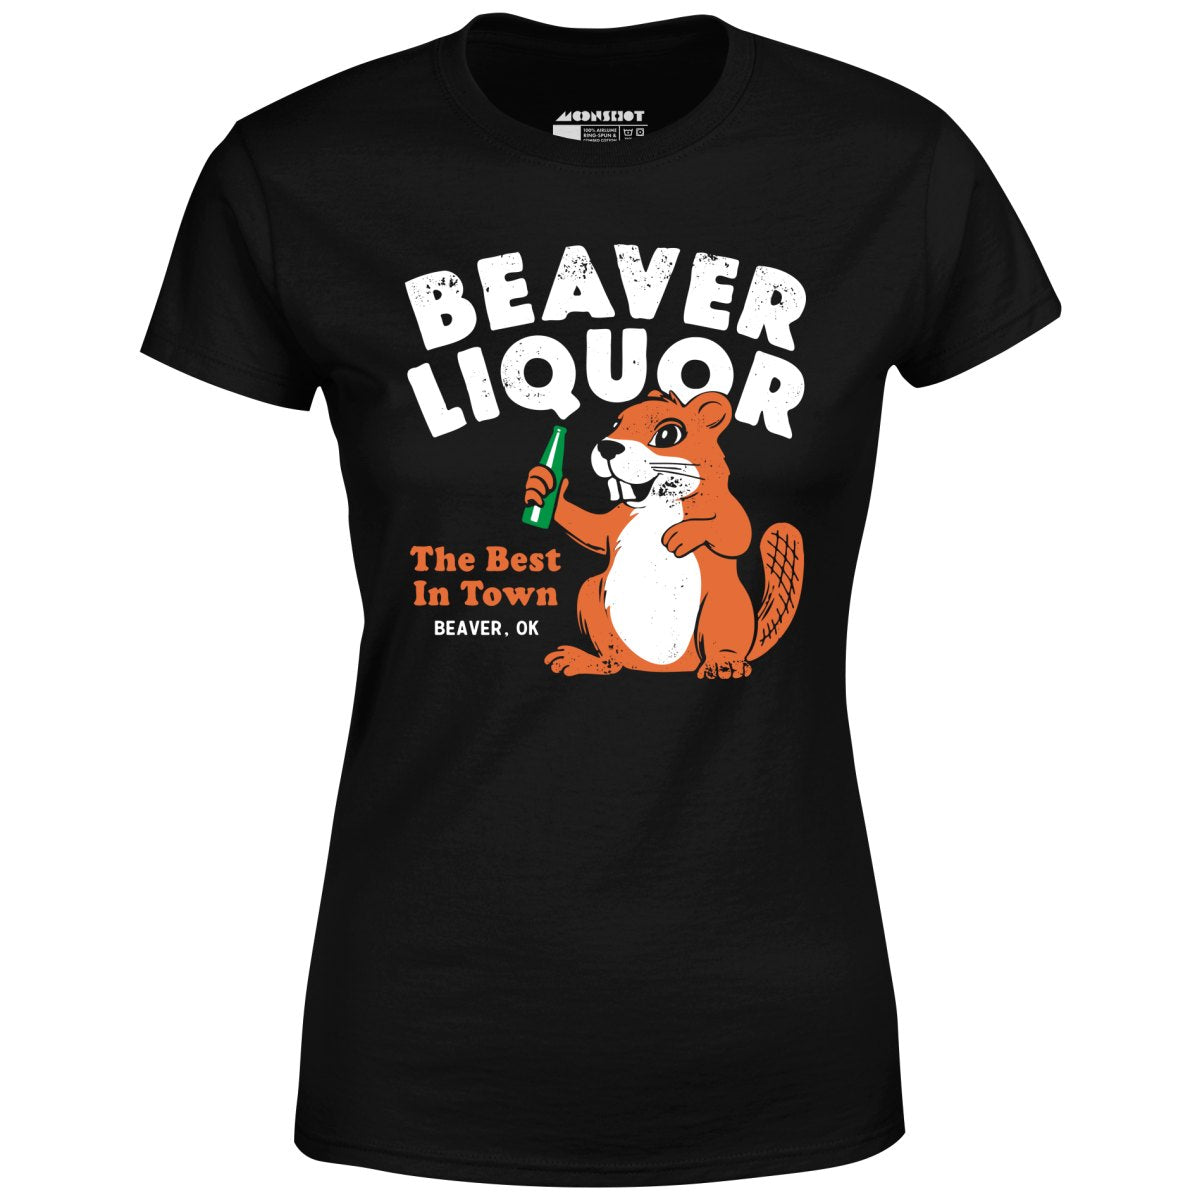 Beaver Liquor - Women's T-Shirt